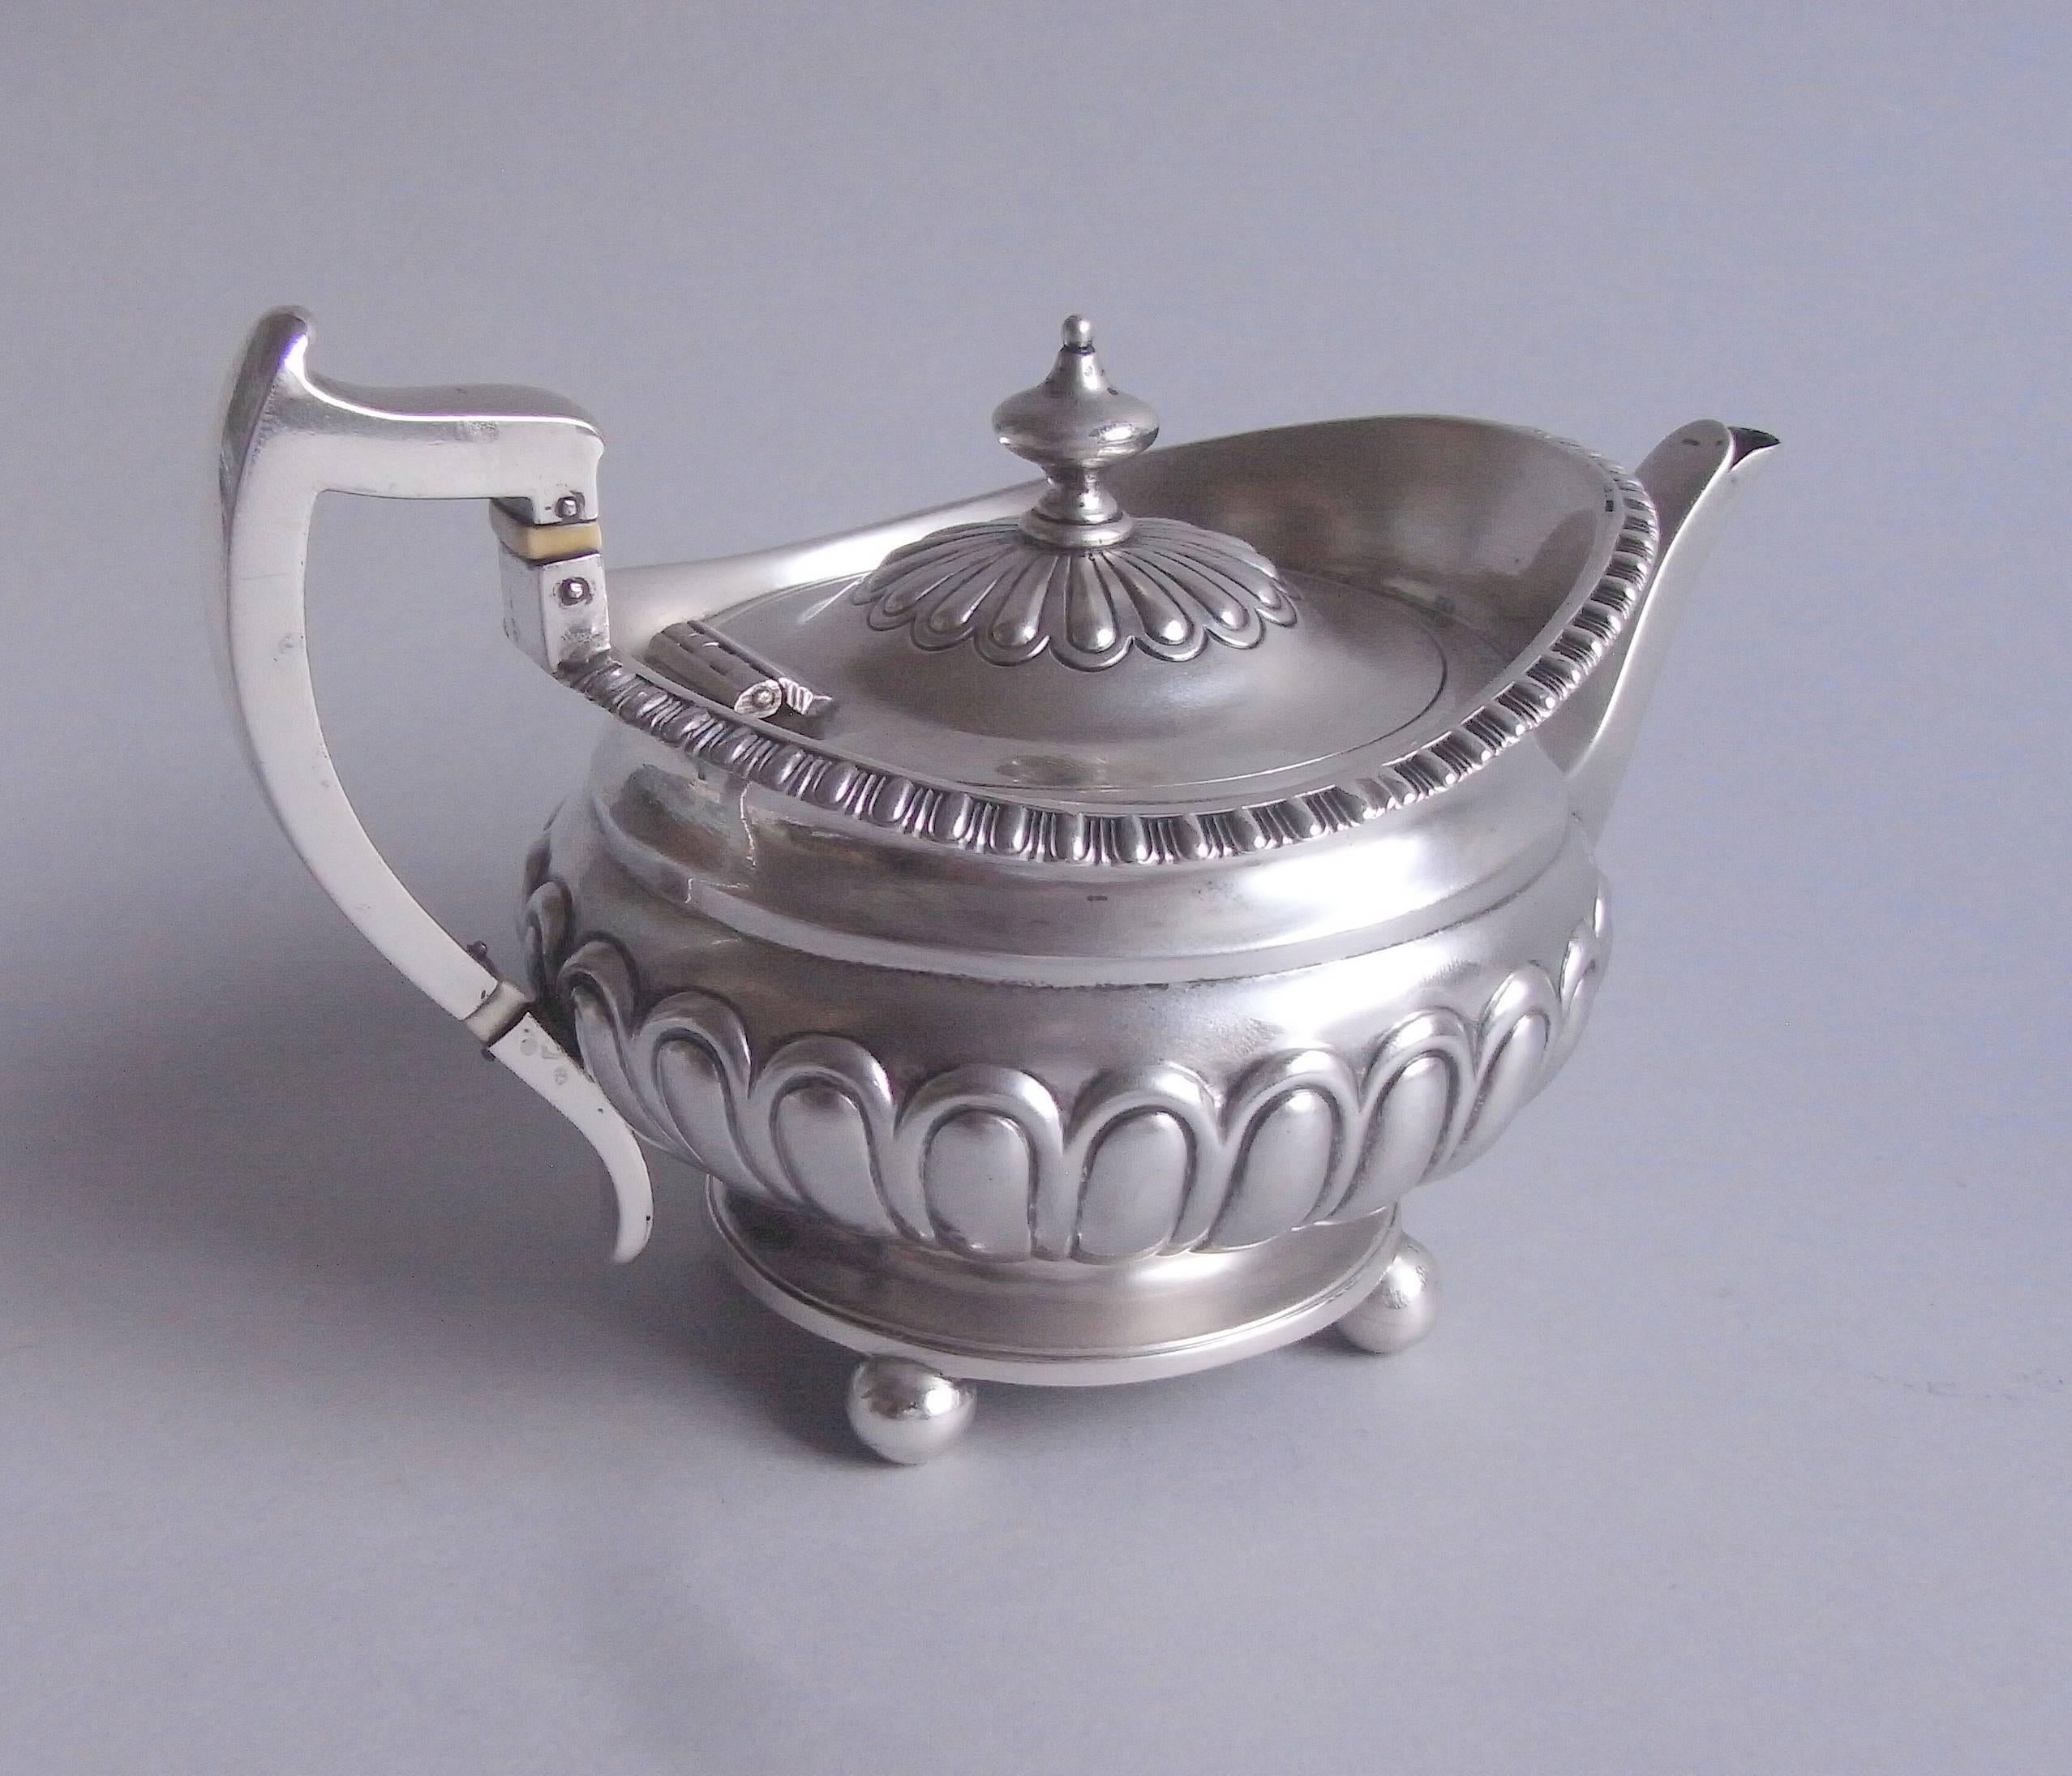 Scottish A rare George III Saffron Teapot made in Edinburgh by William Marshall.